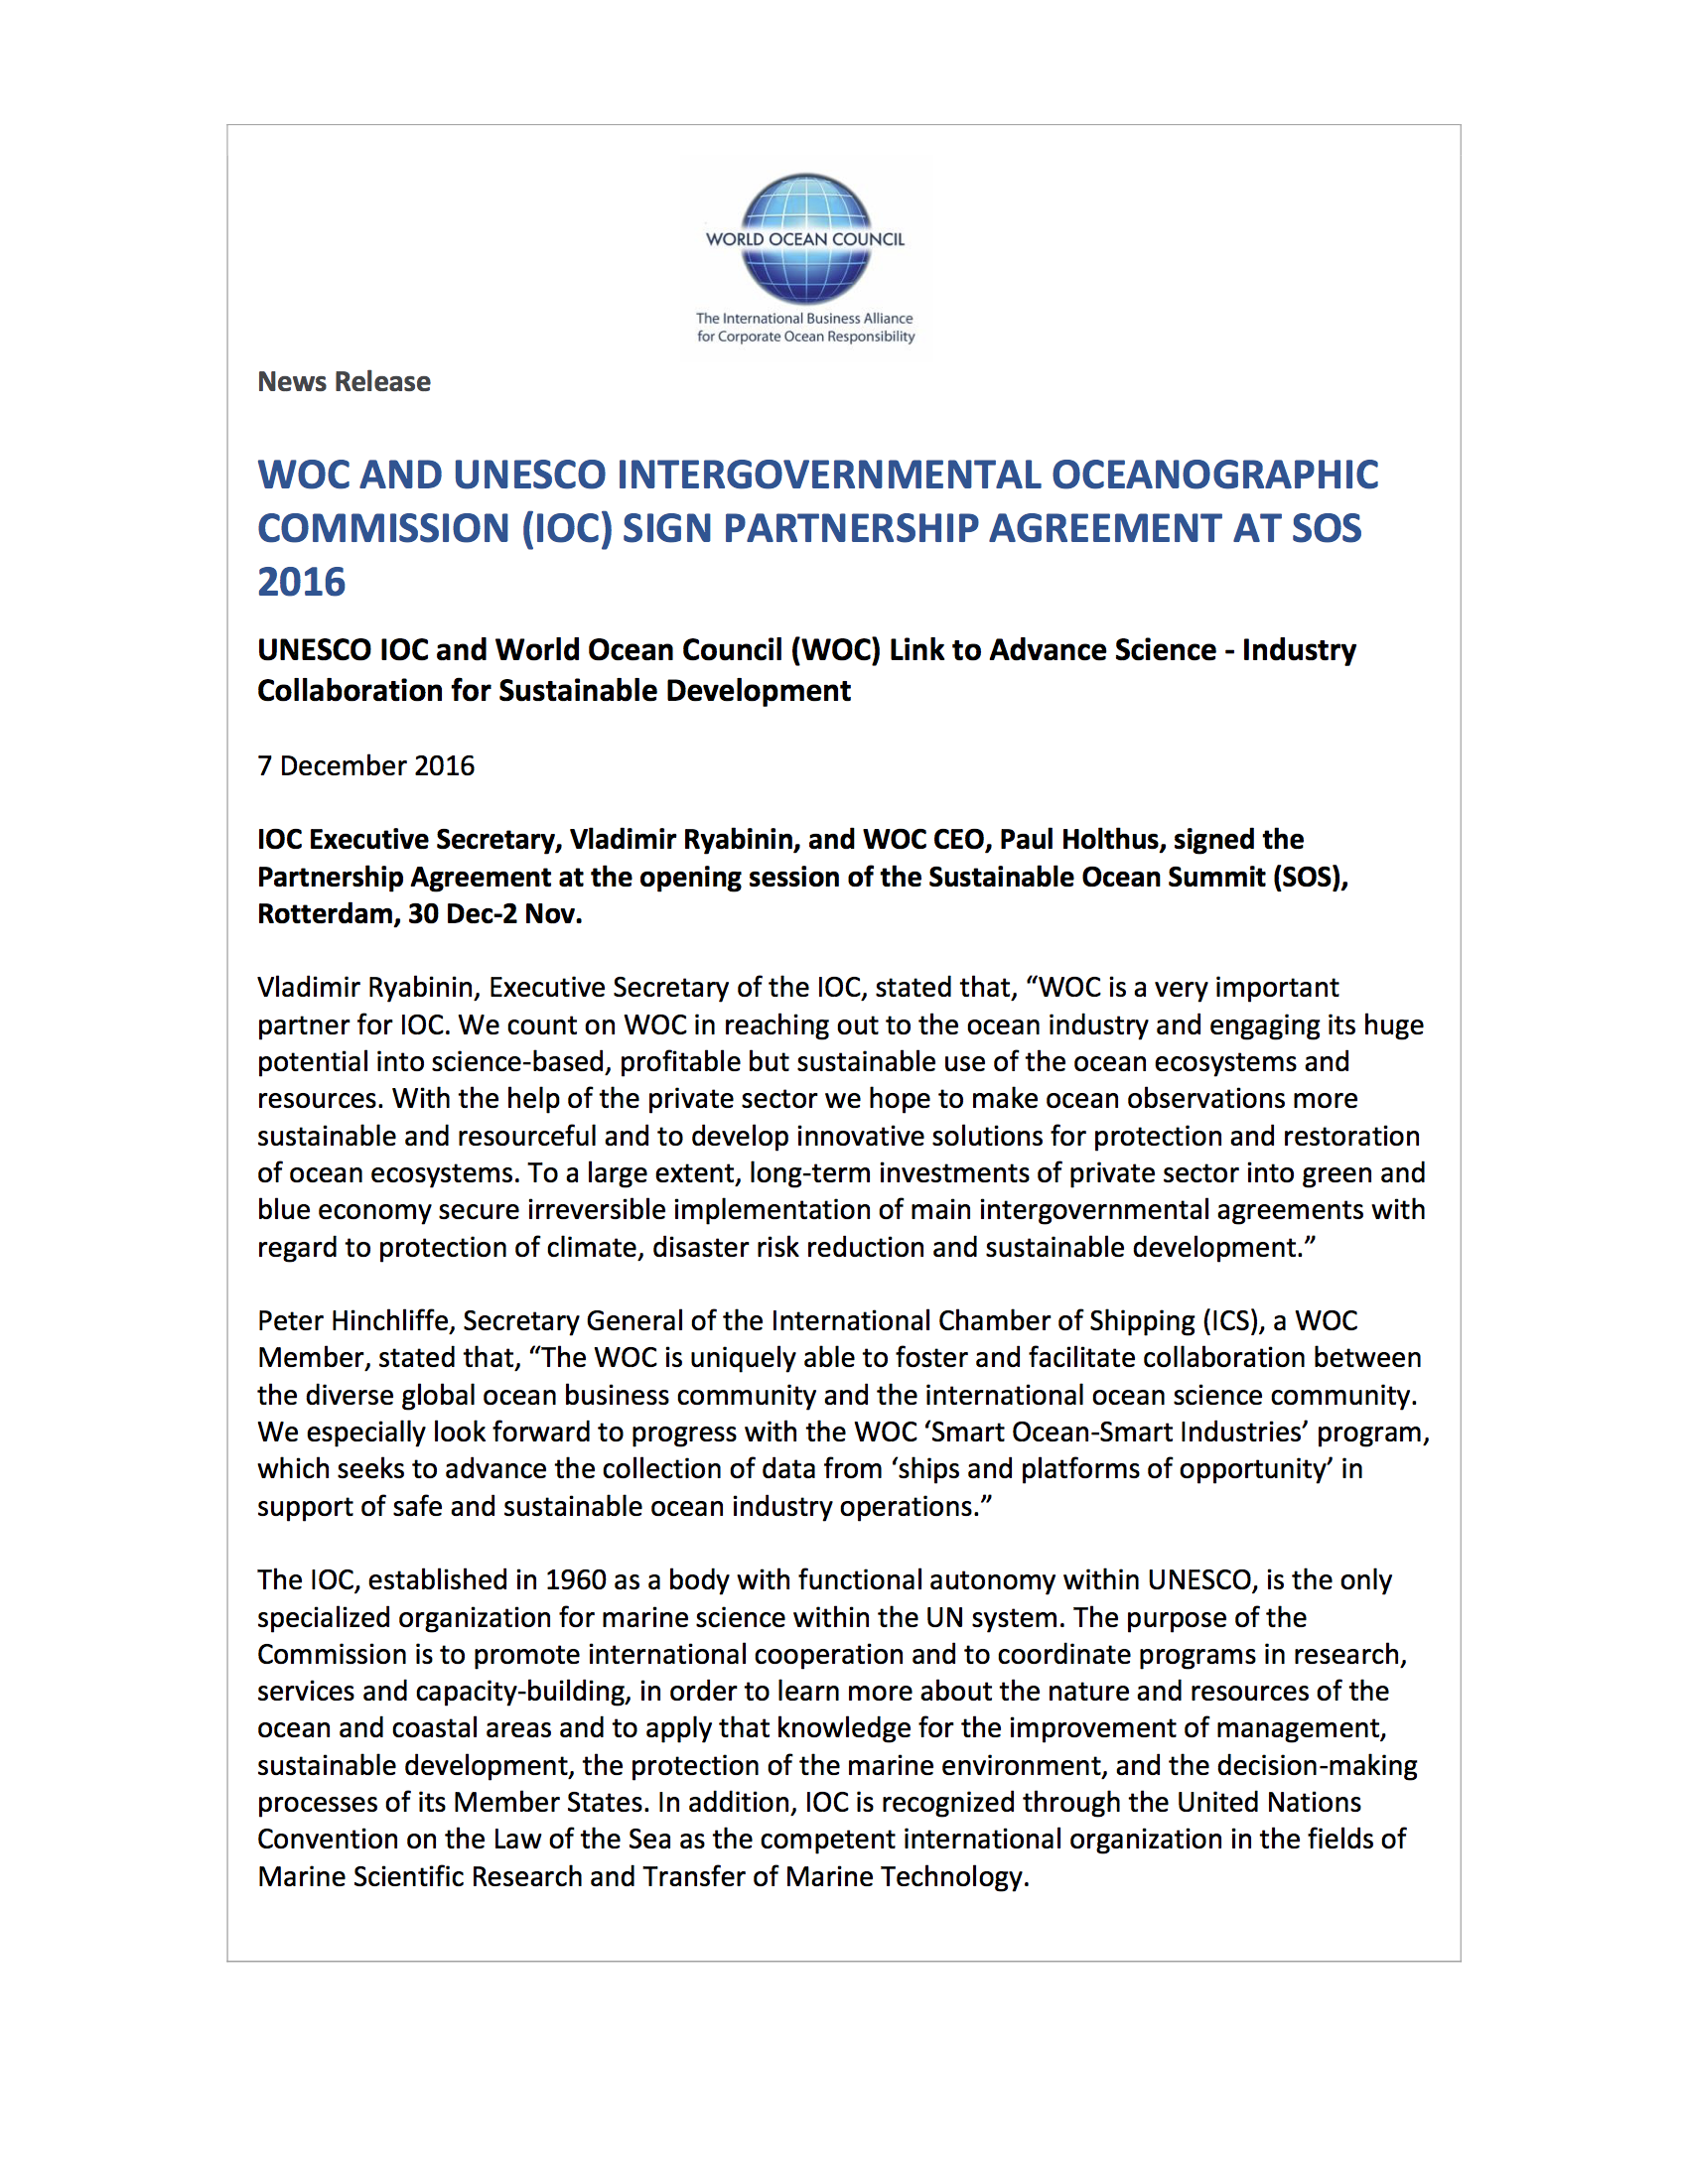 WOC and UNESCO Intergovernmental Oceanographic Commission Partnership Agreement